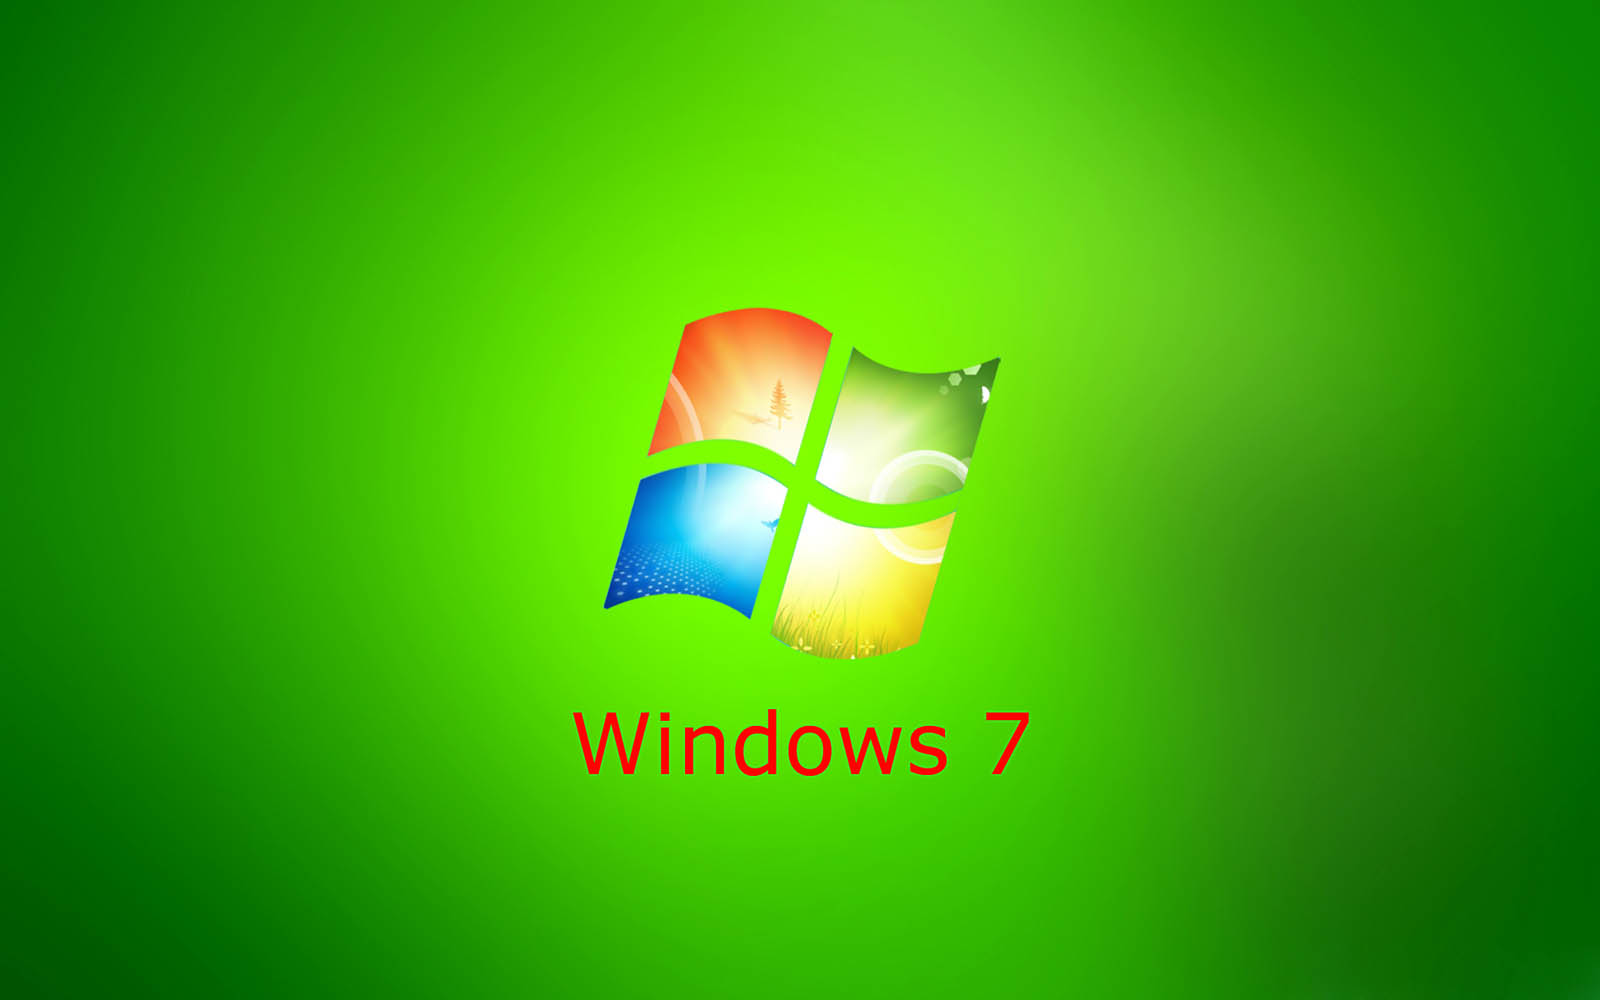 wallpapers windows 7,green,light,operating system,logo,flag